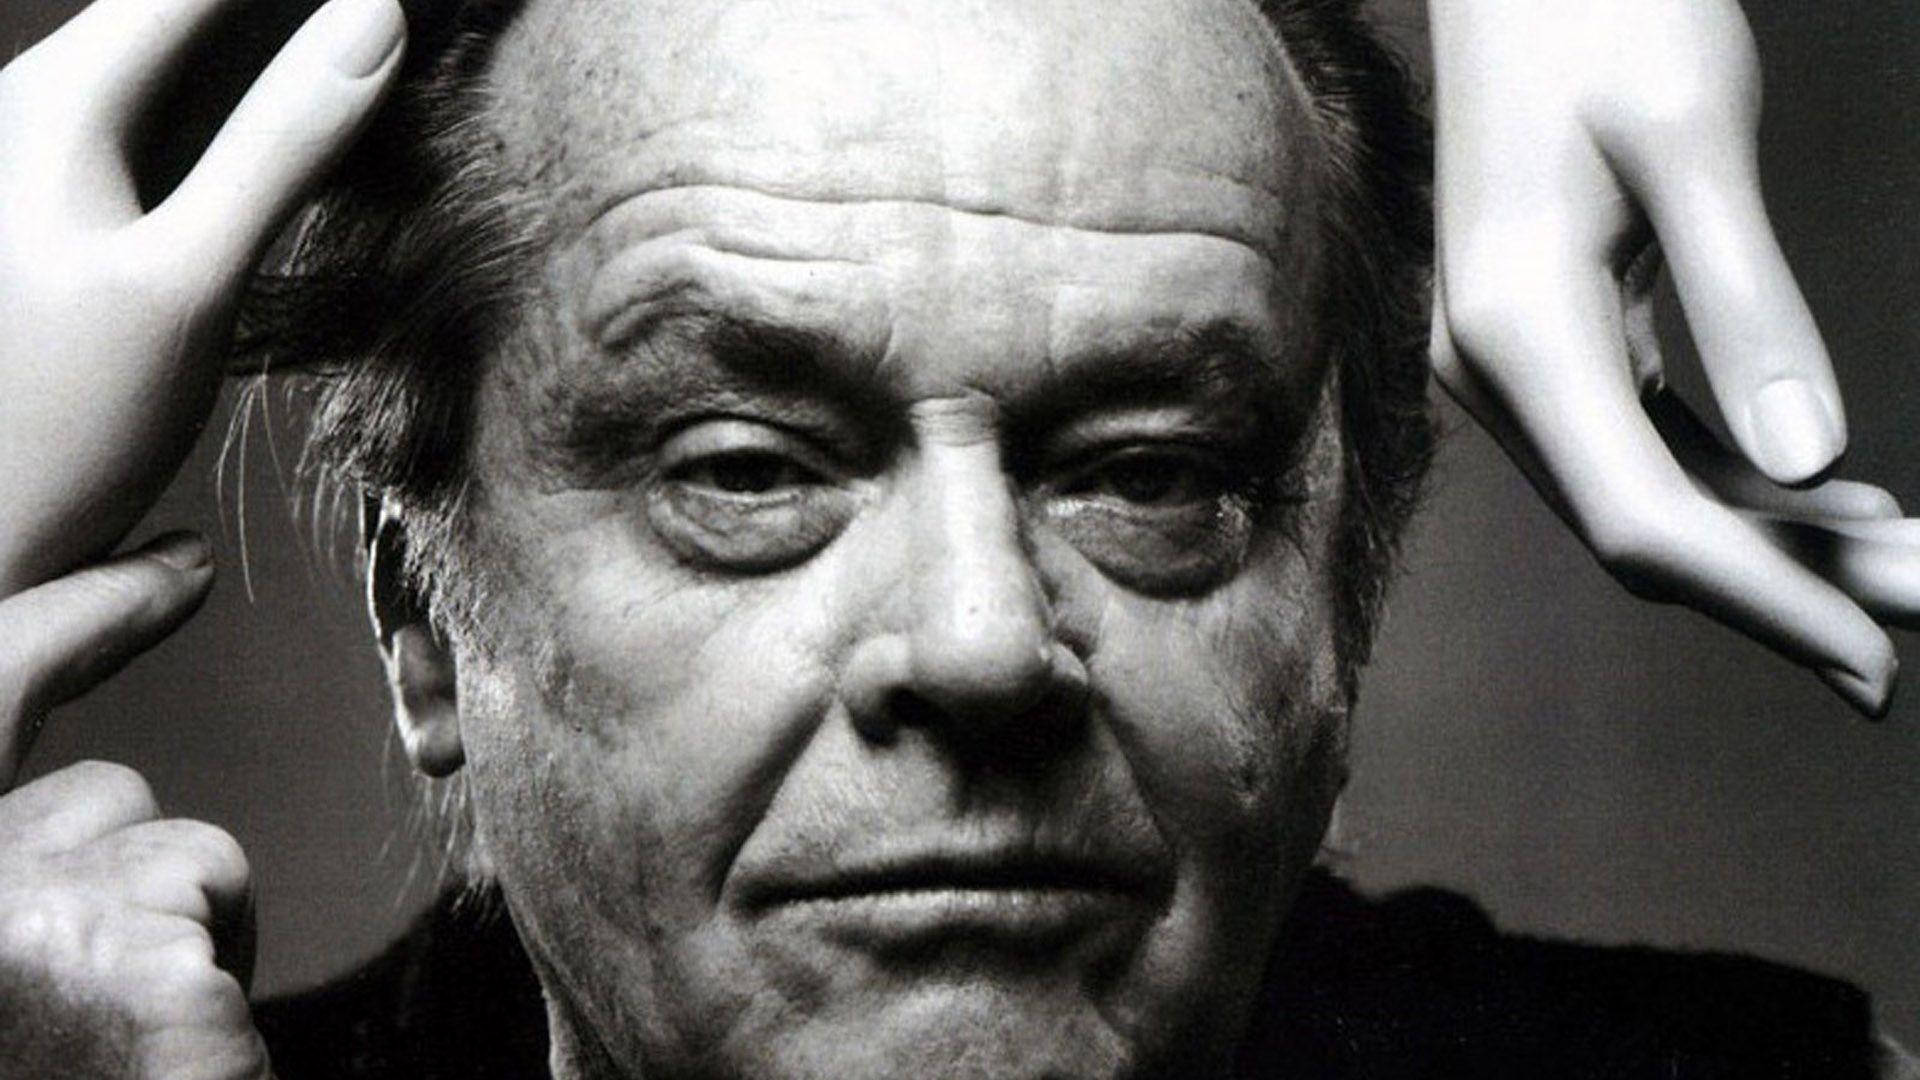 Jack Nicholson Iconic Portrait Photo